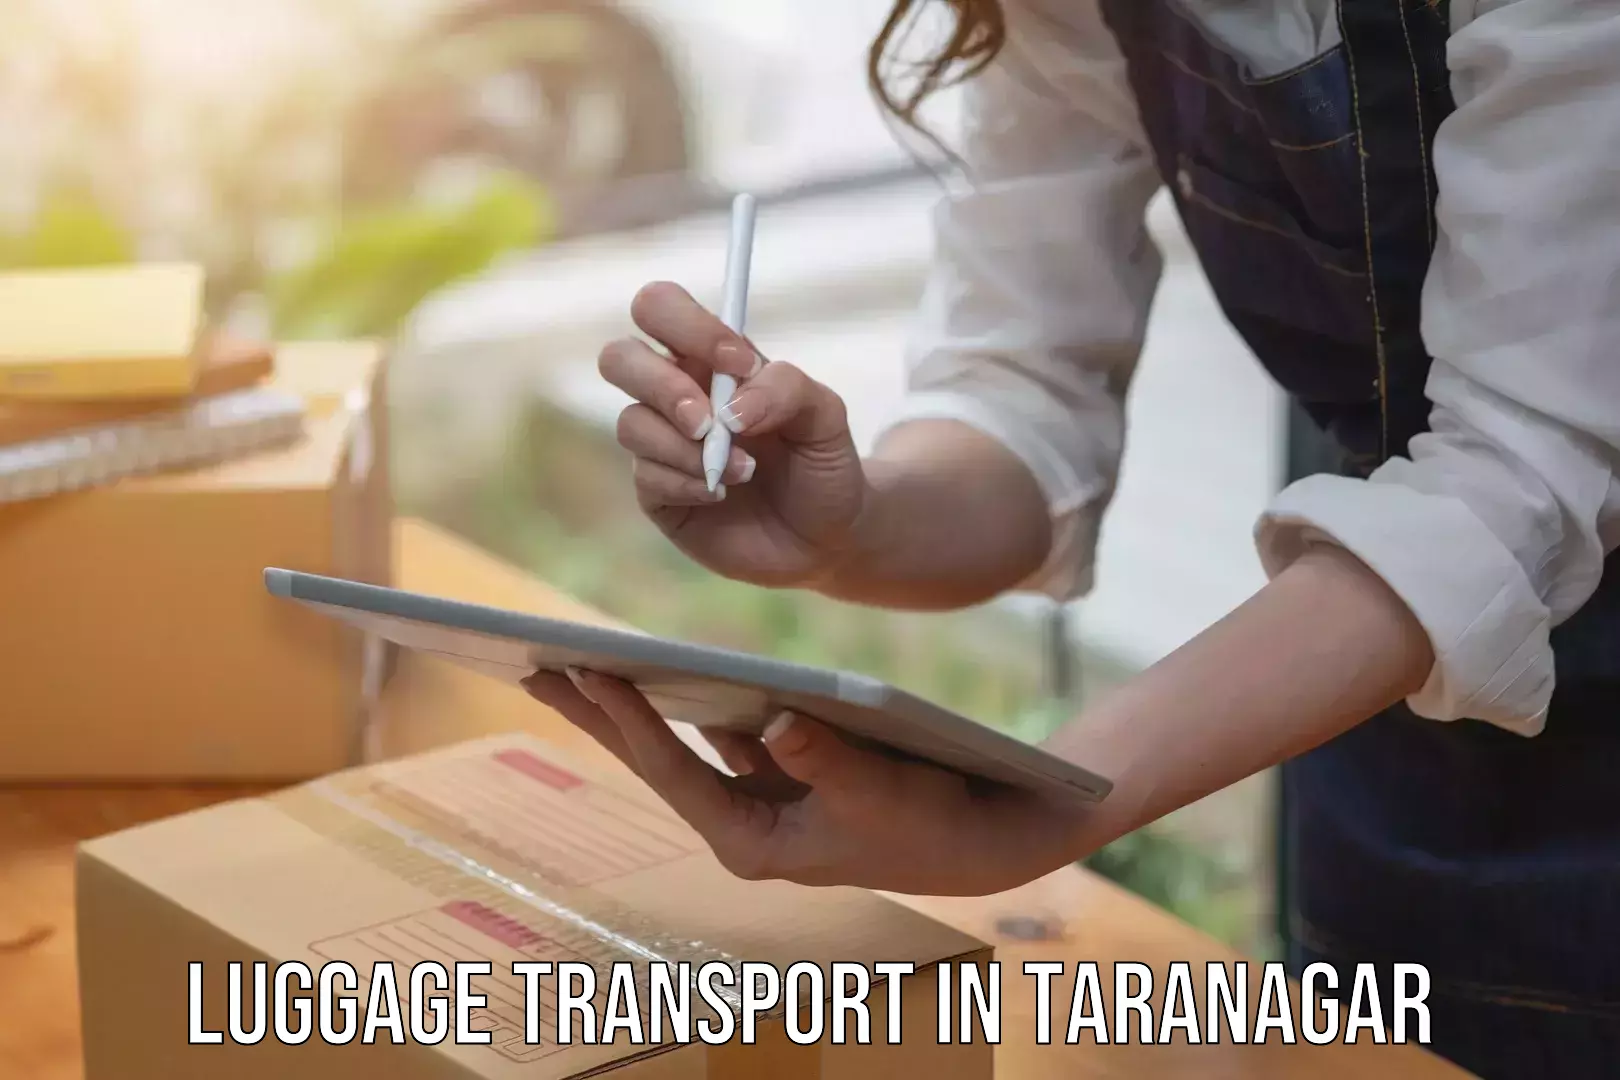 Luggage shipping planner in Taranagar